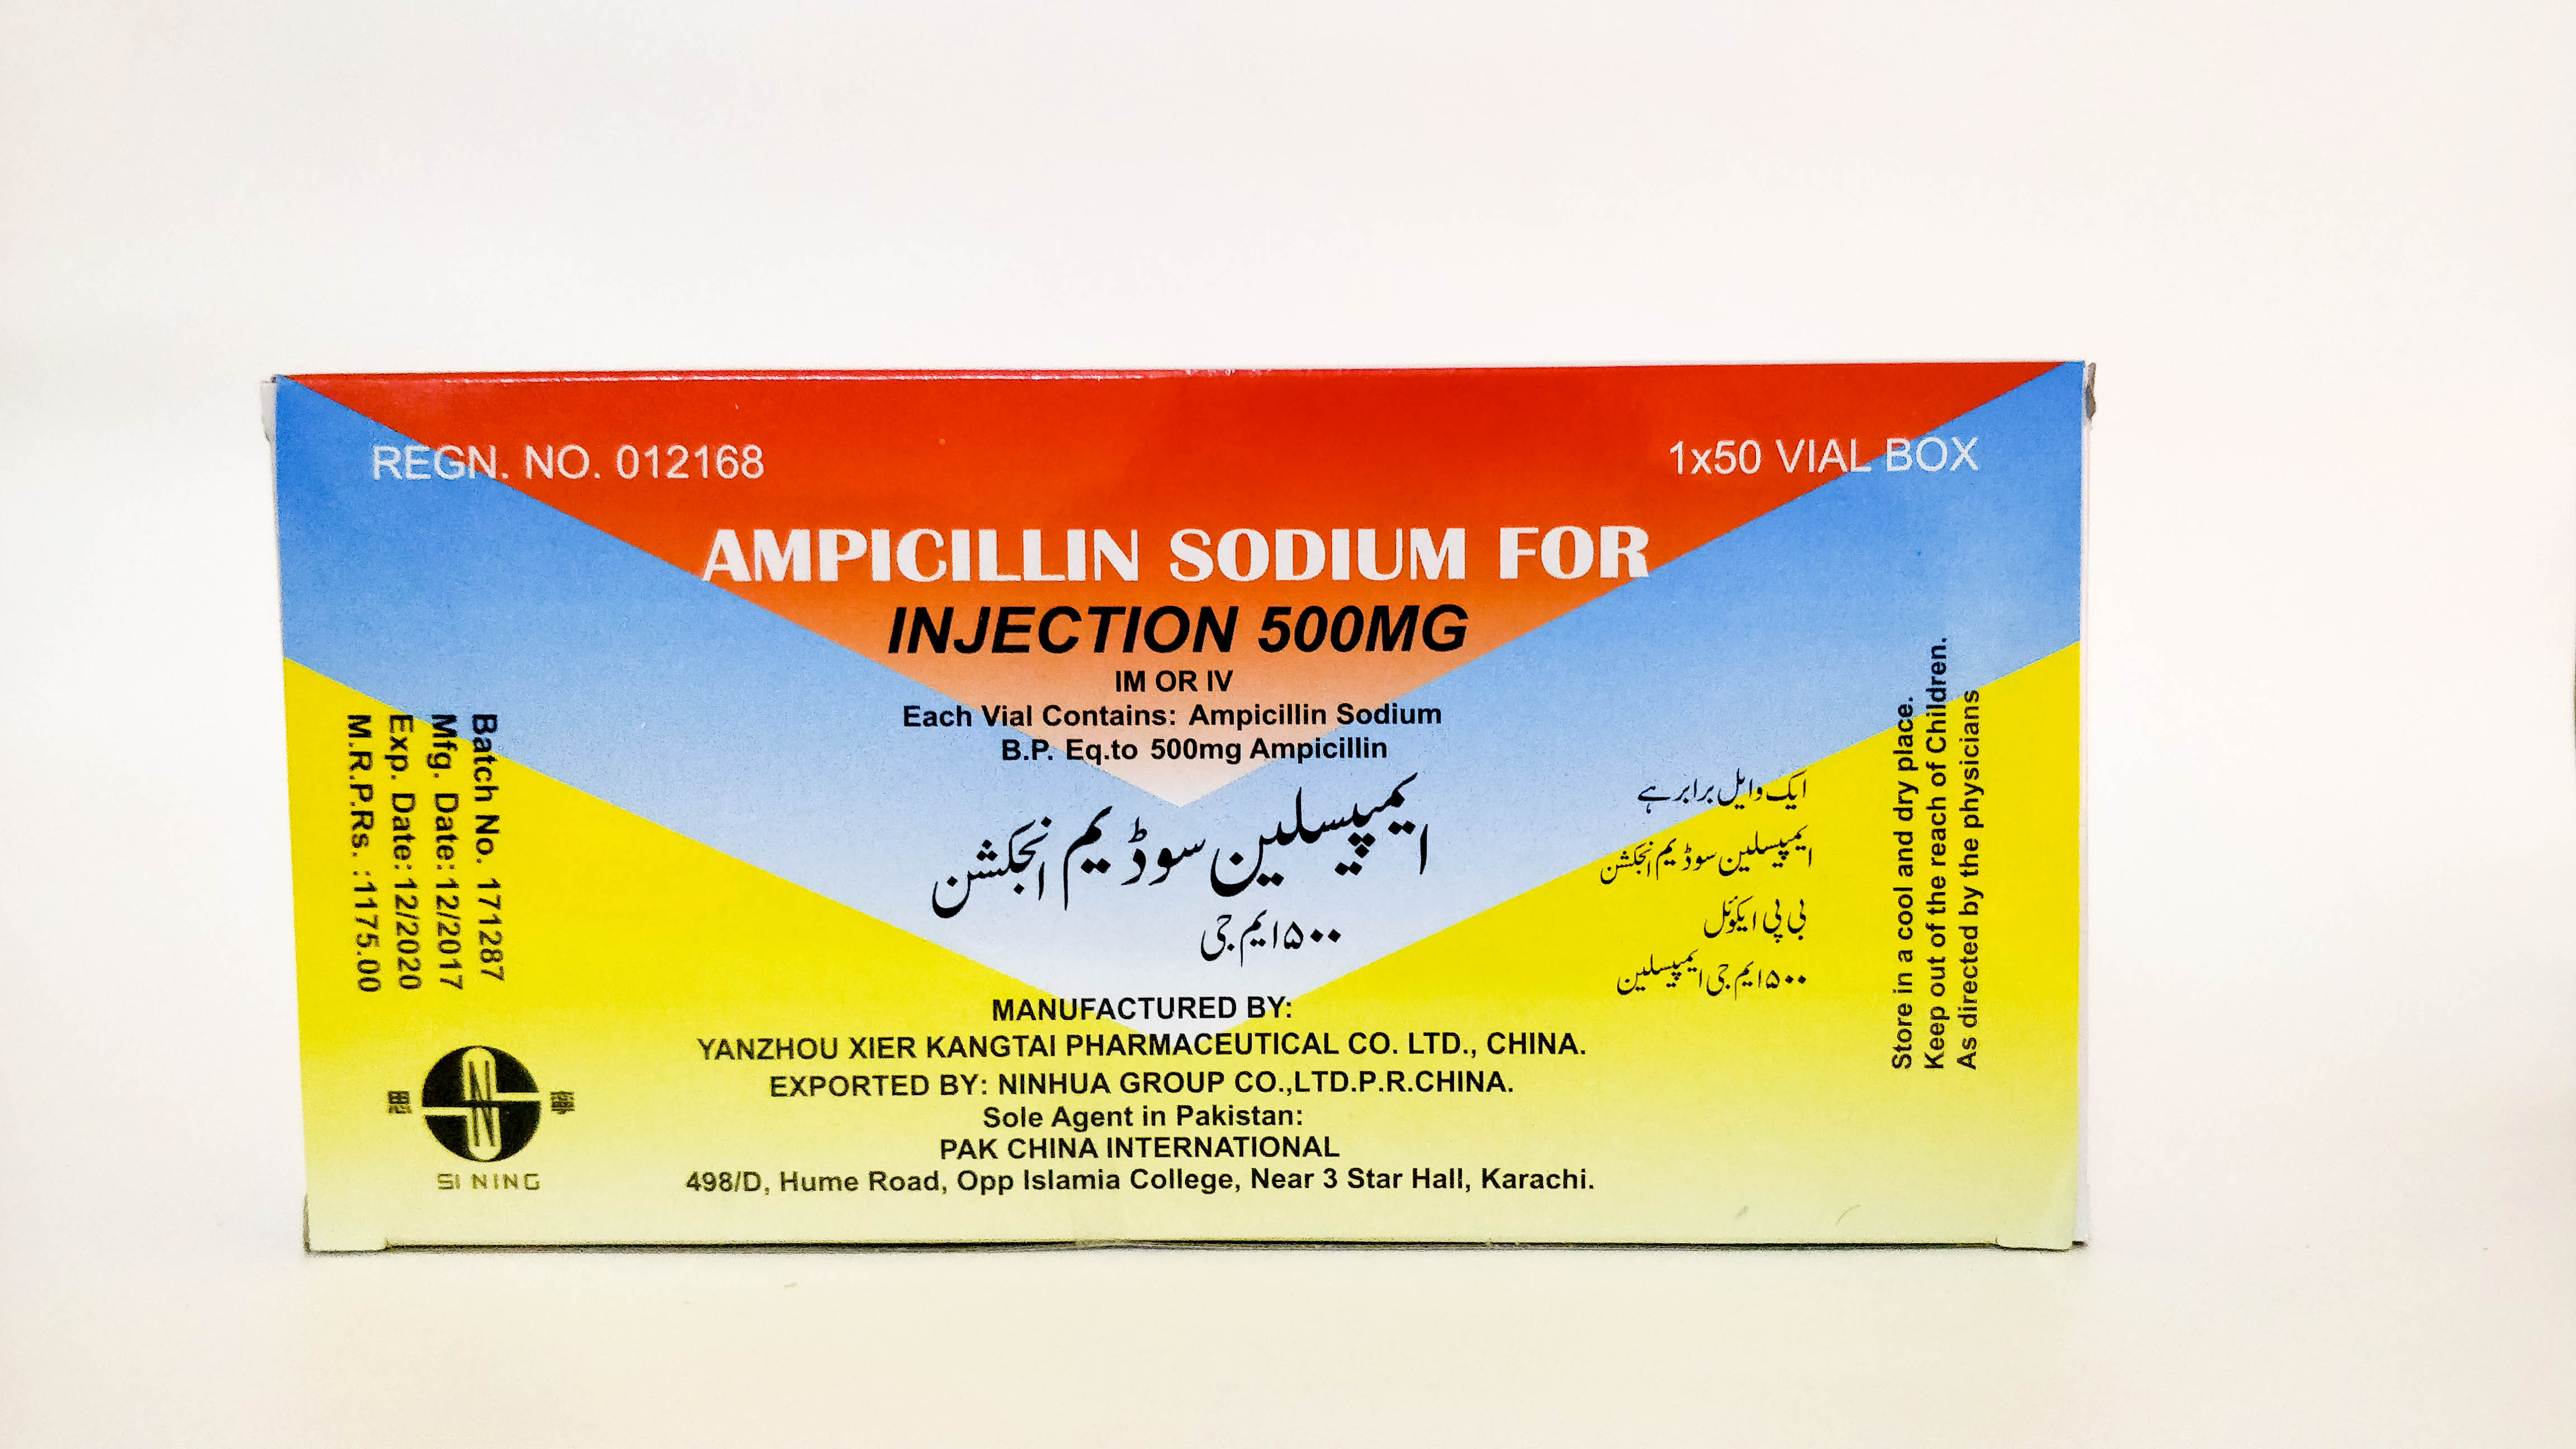 Ampicillin Sodium Injection 500mg